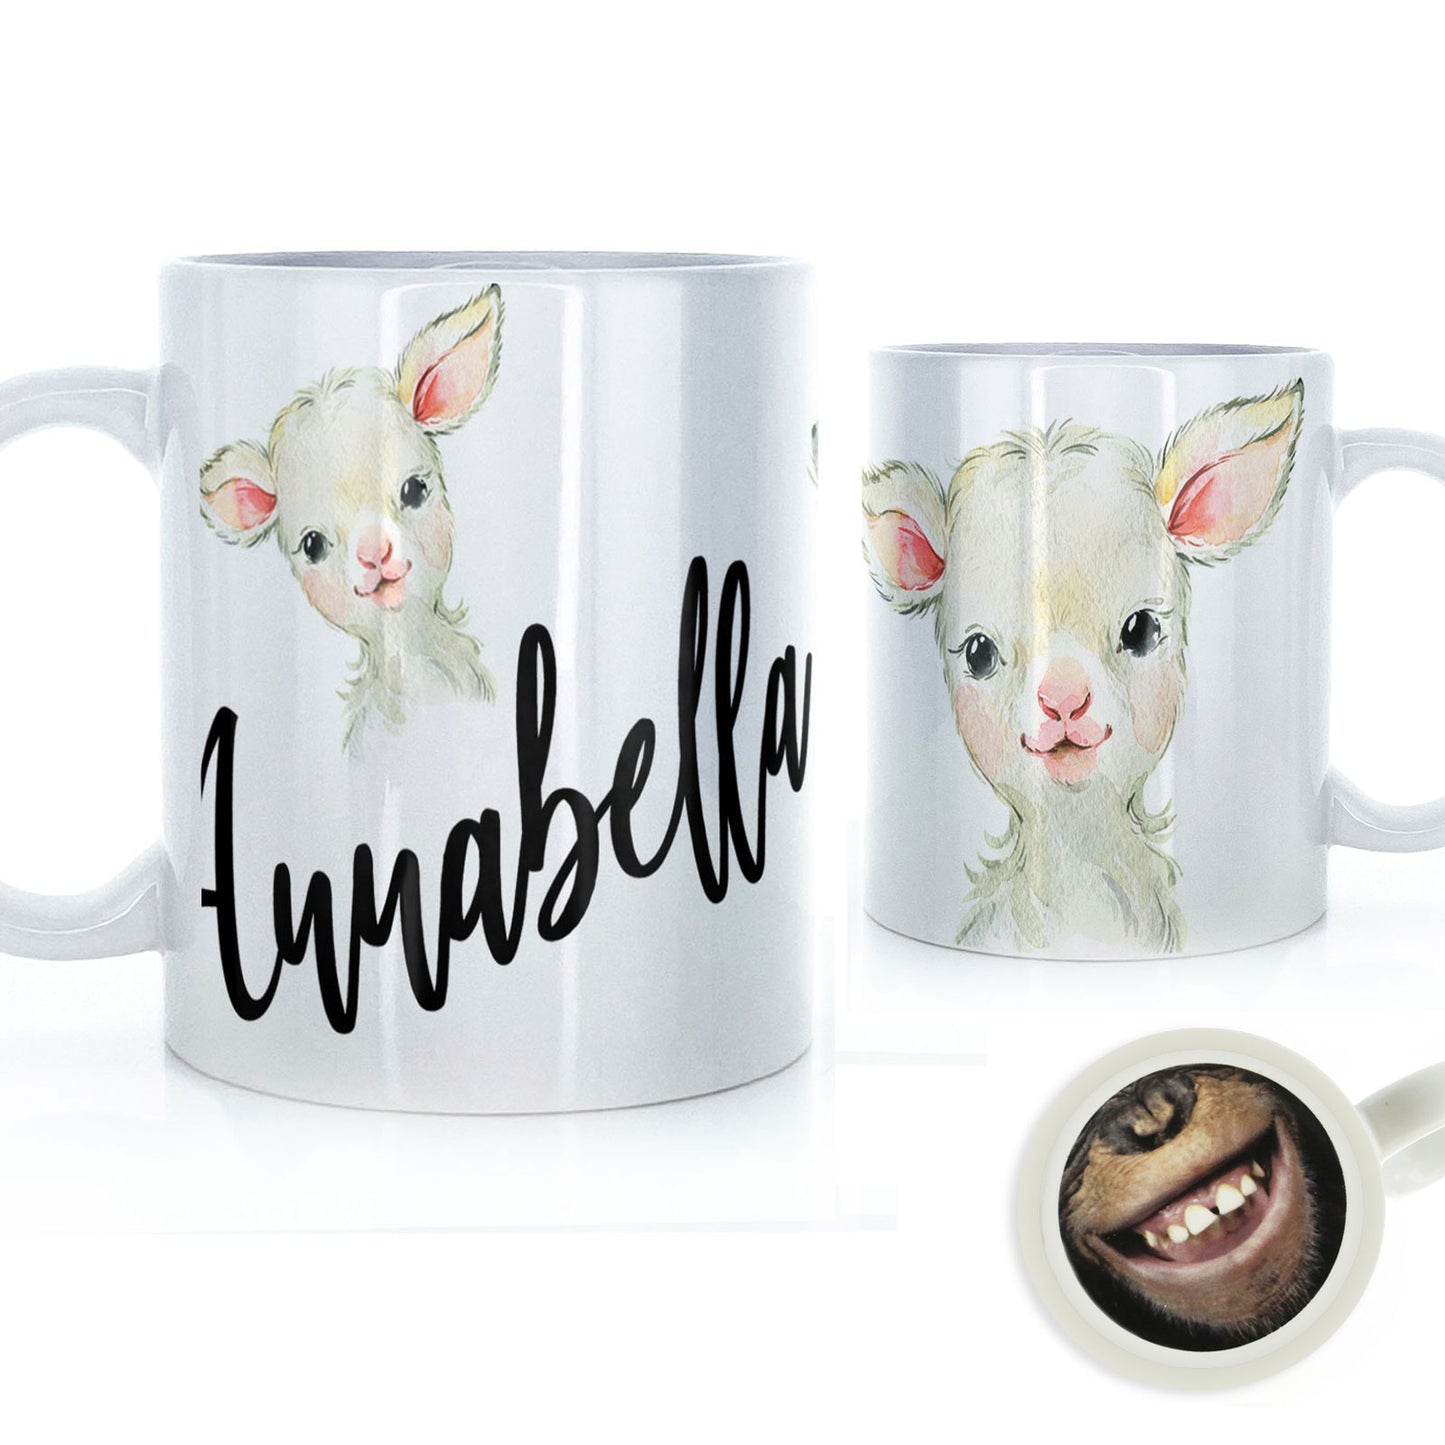 Personalised Mug with Stylish Text and Cute Lamb